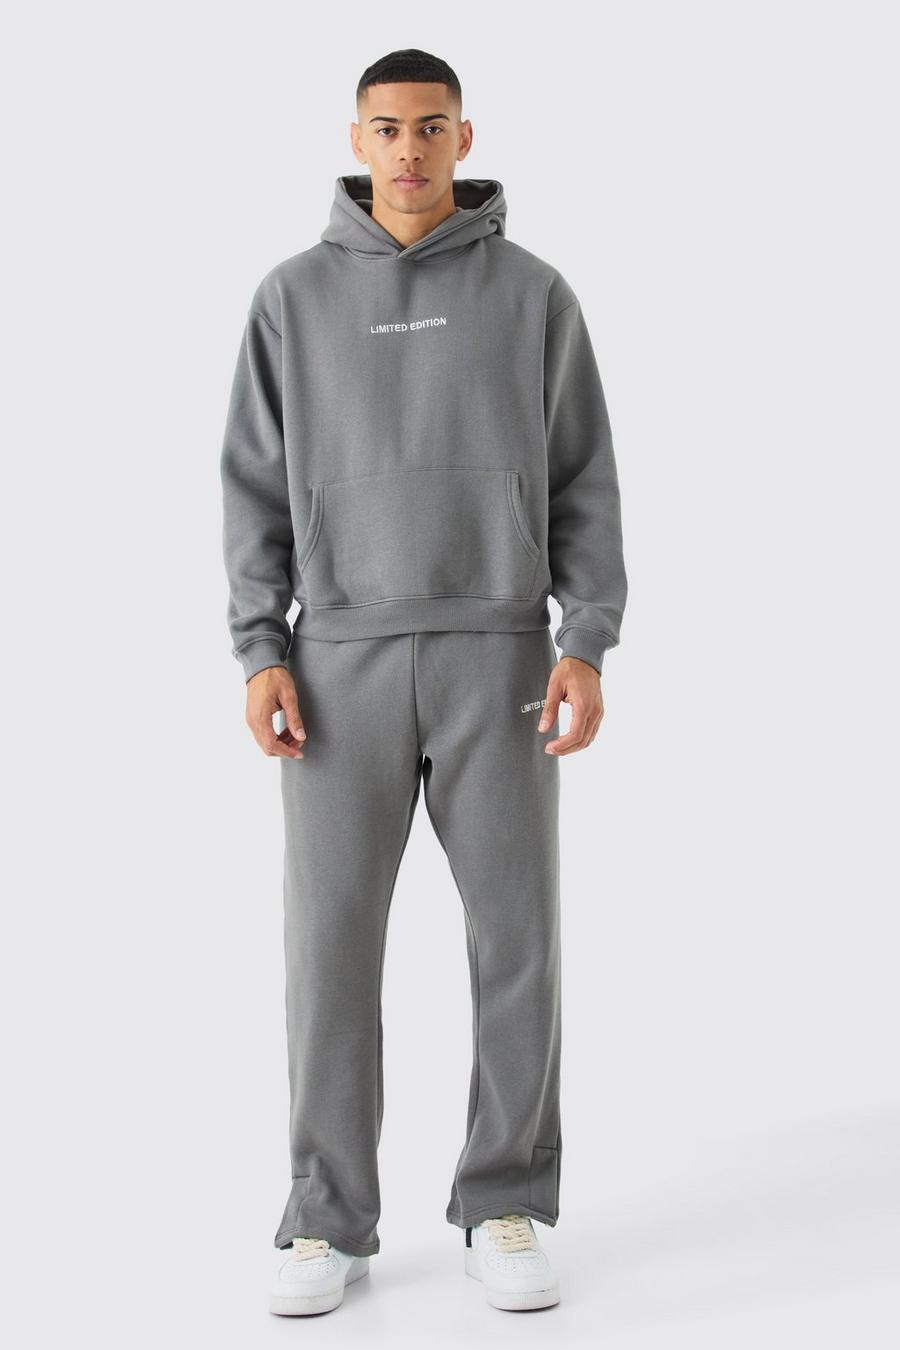 Kastiger Limited Edition Oversize Trainingsanzug mit geteiltem Saum, Charcoal image number 1